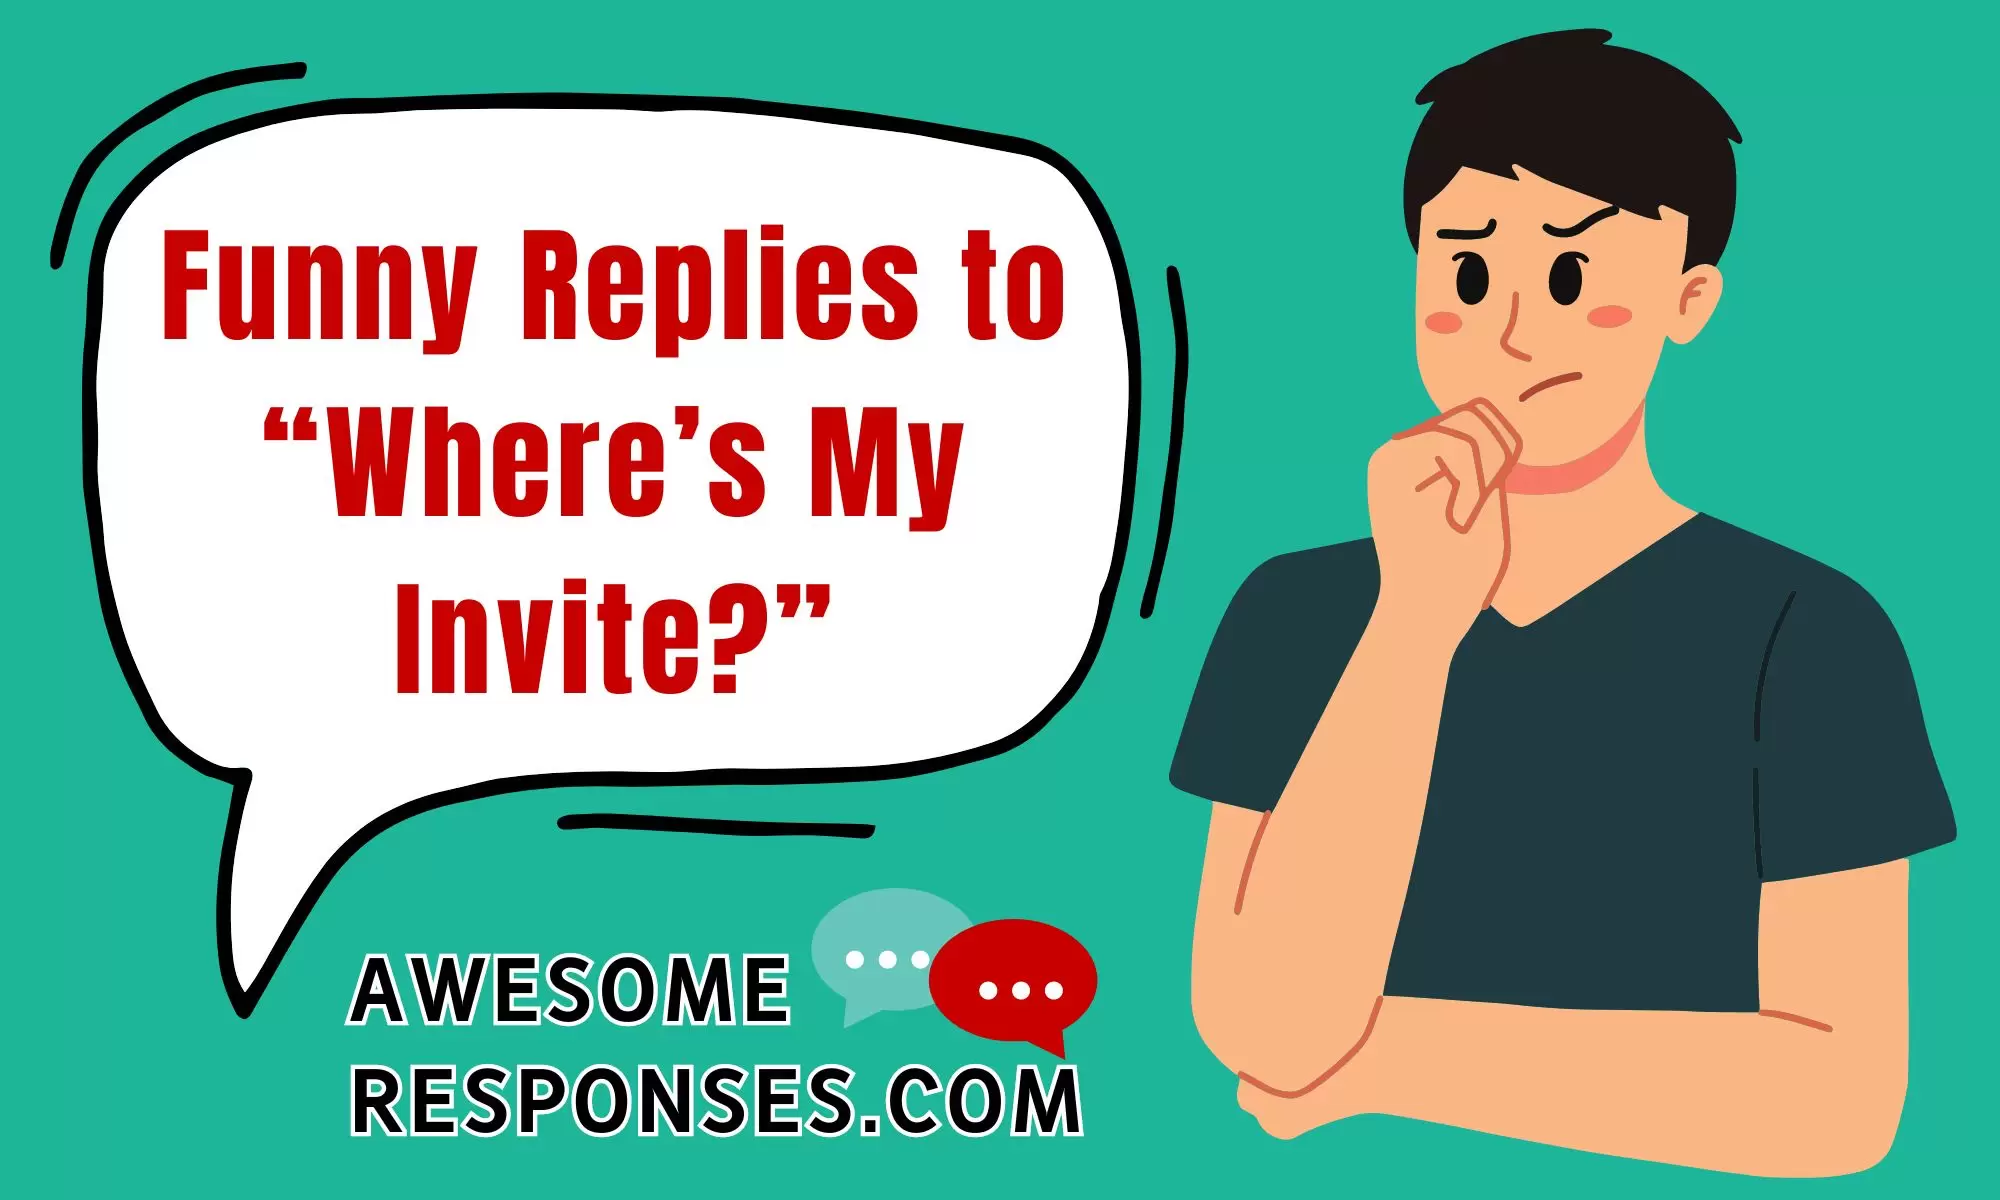 Funny Replies to “Where’s My Invite?”